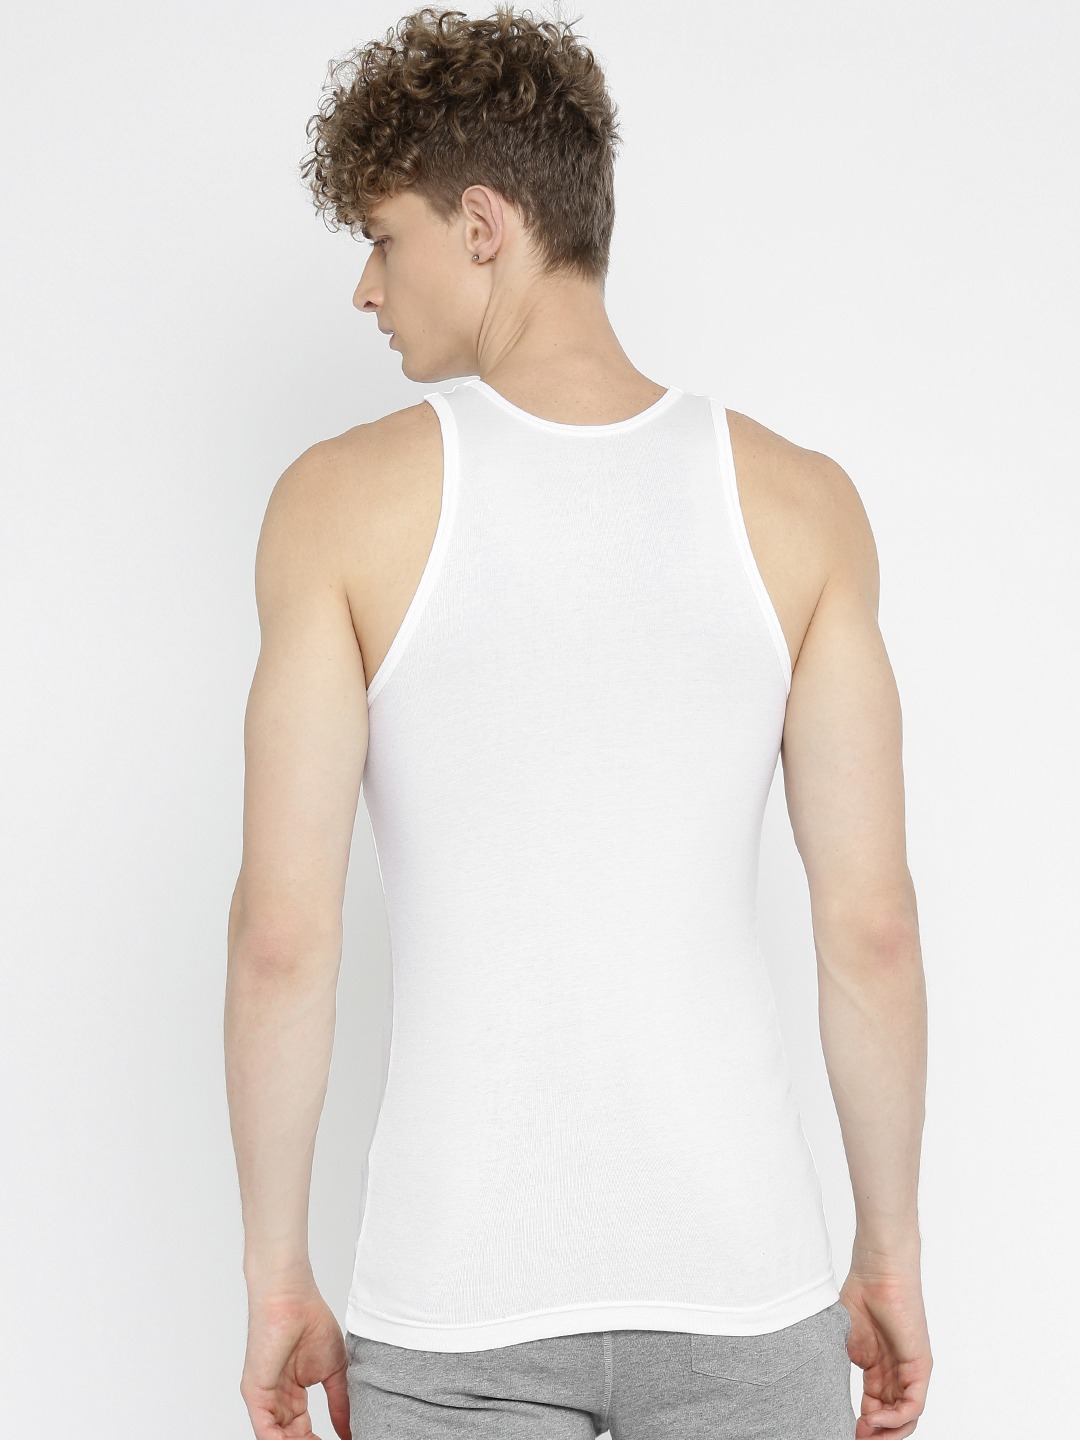 Clothing Innerwear Vests | Jockey Men White Solid Innerwear Vest 9928-0105 - AK07490